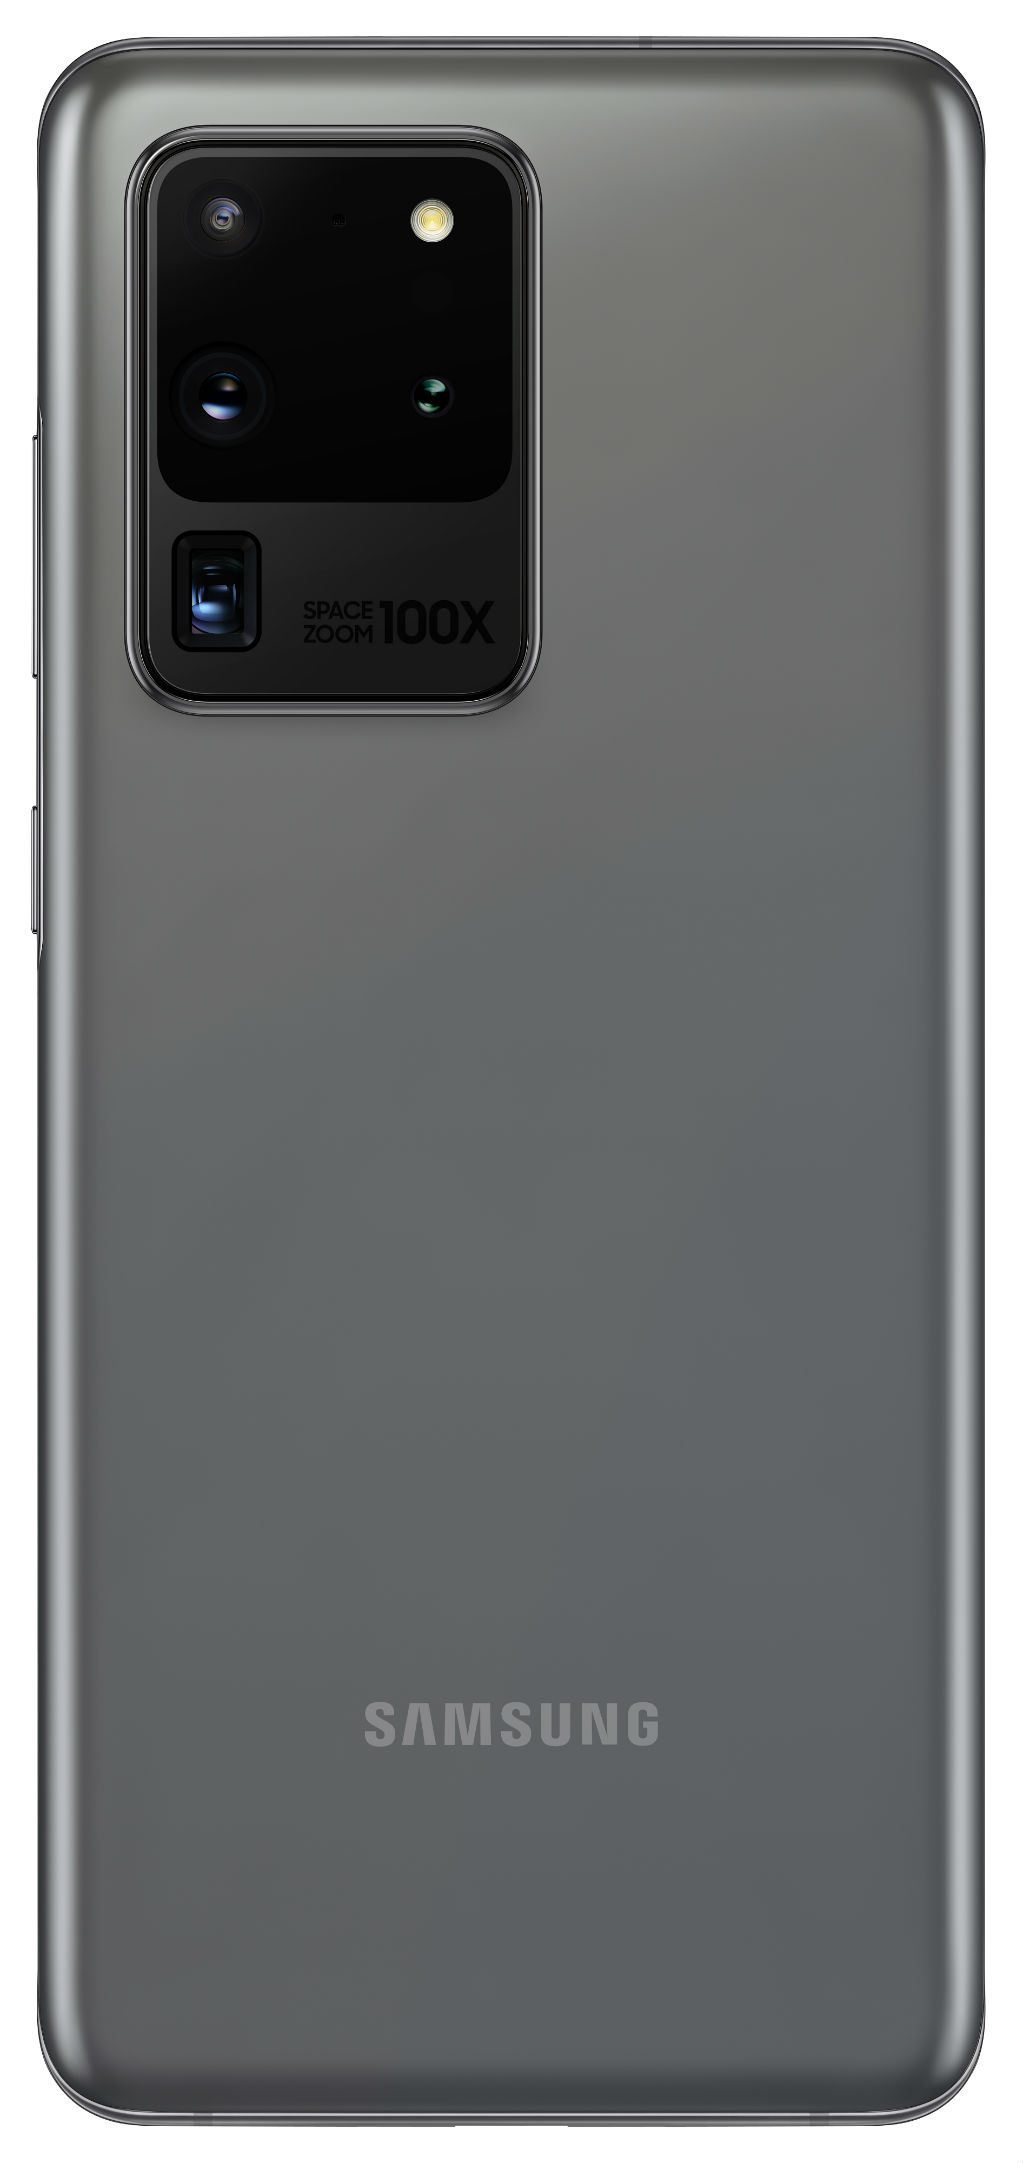 SAMSUNG Unlocked Galaxy S20 Ultra, 128GB Gray - Smartphone - image 4 of 8